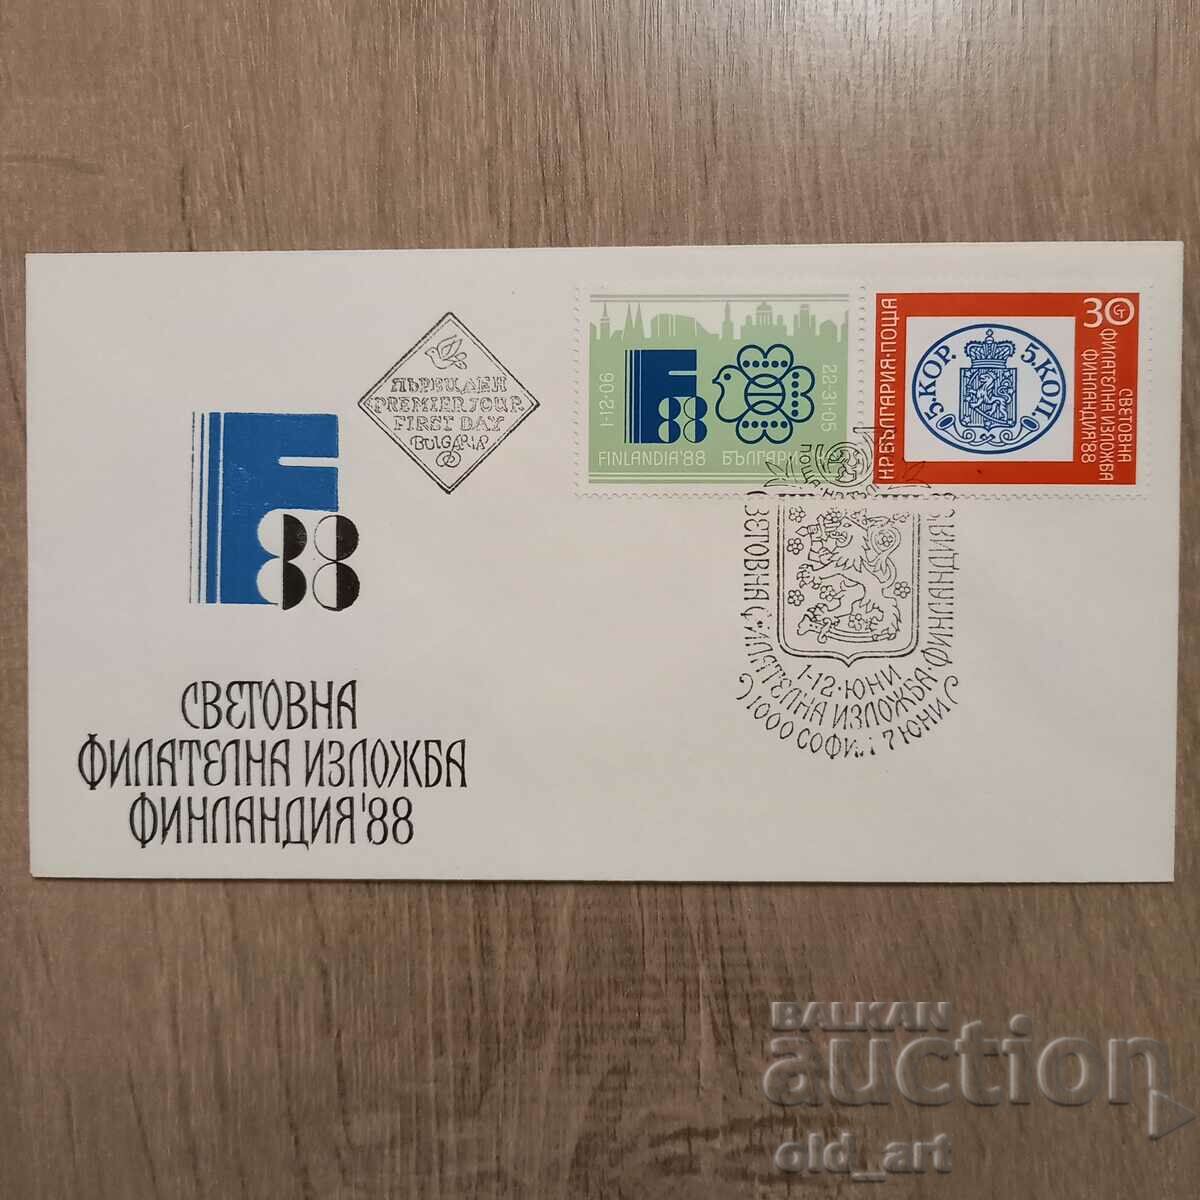 Plic postal - St. Phil. expoziția Finlanda 88